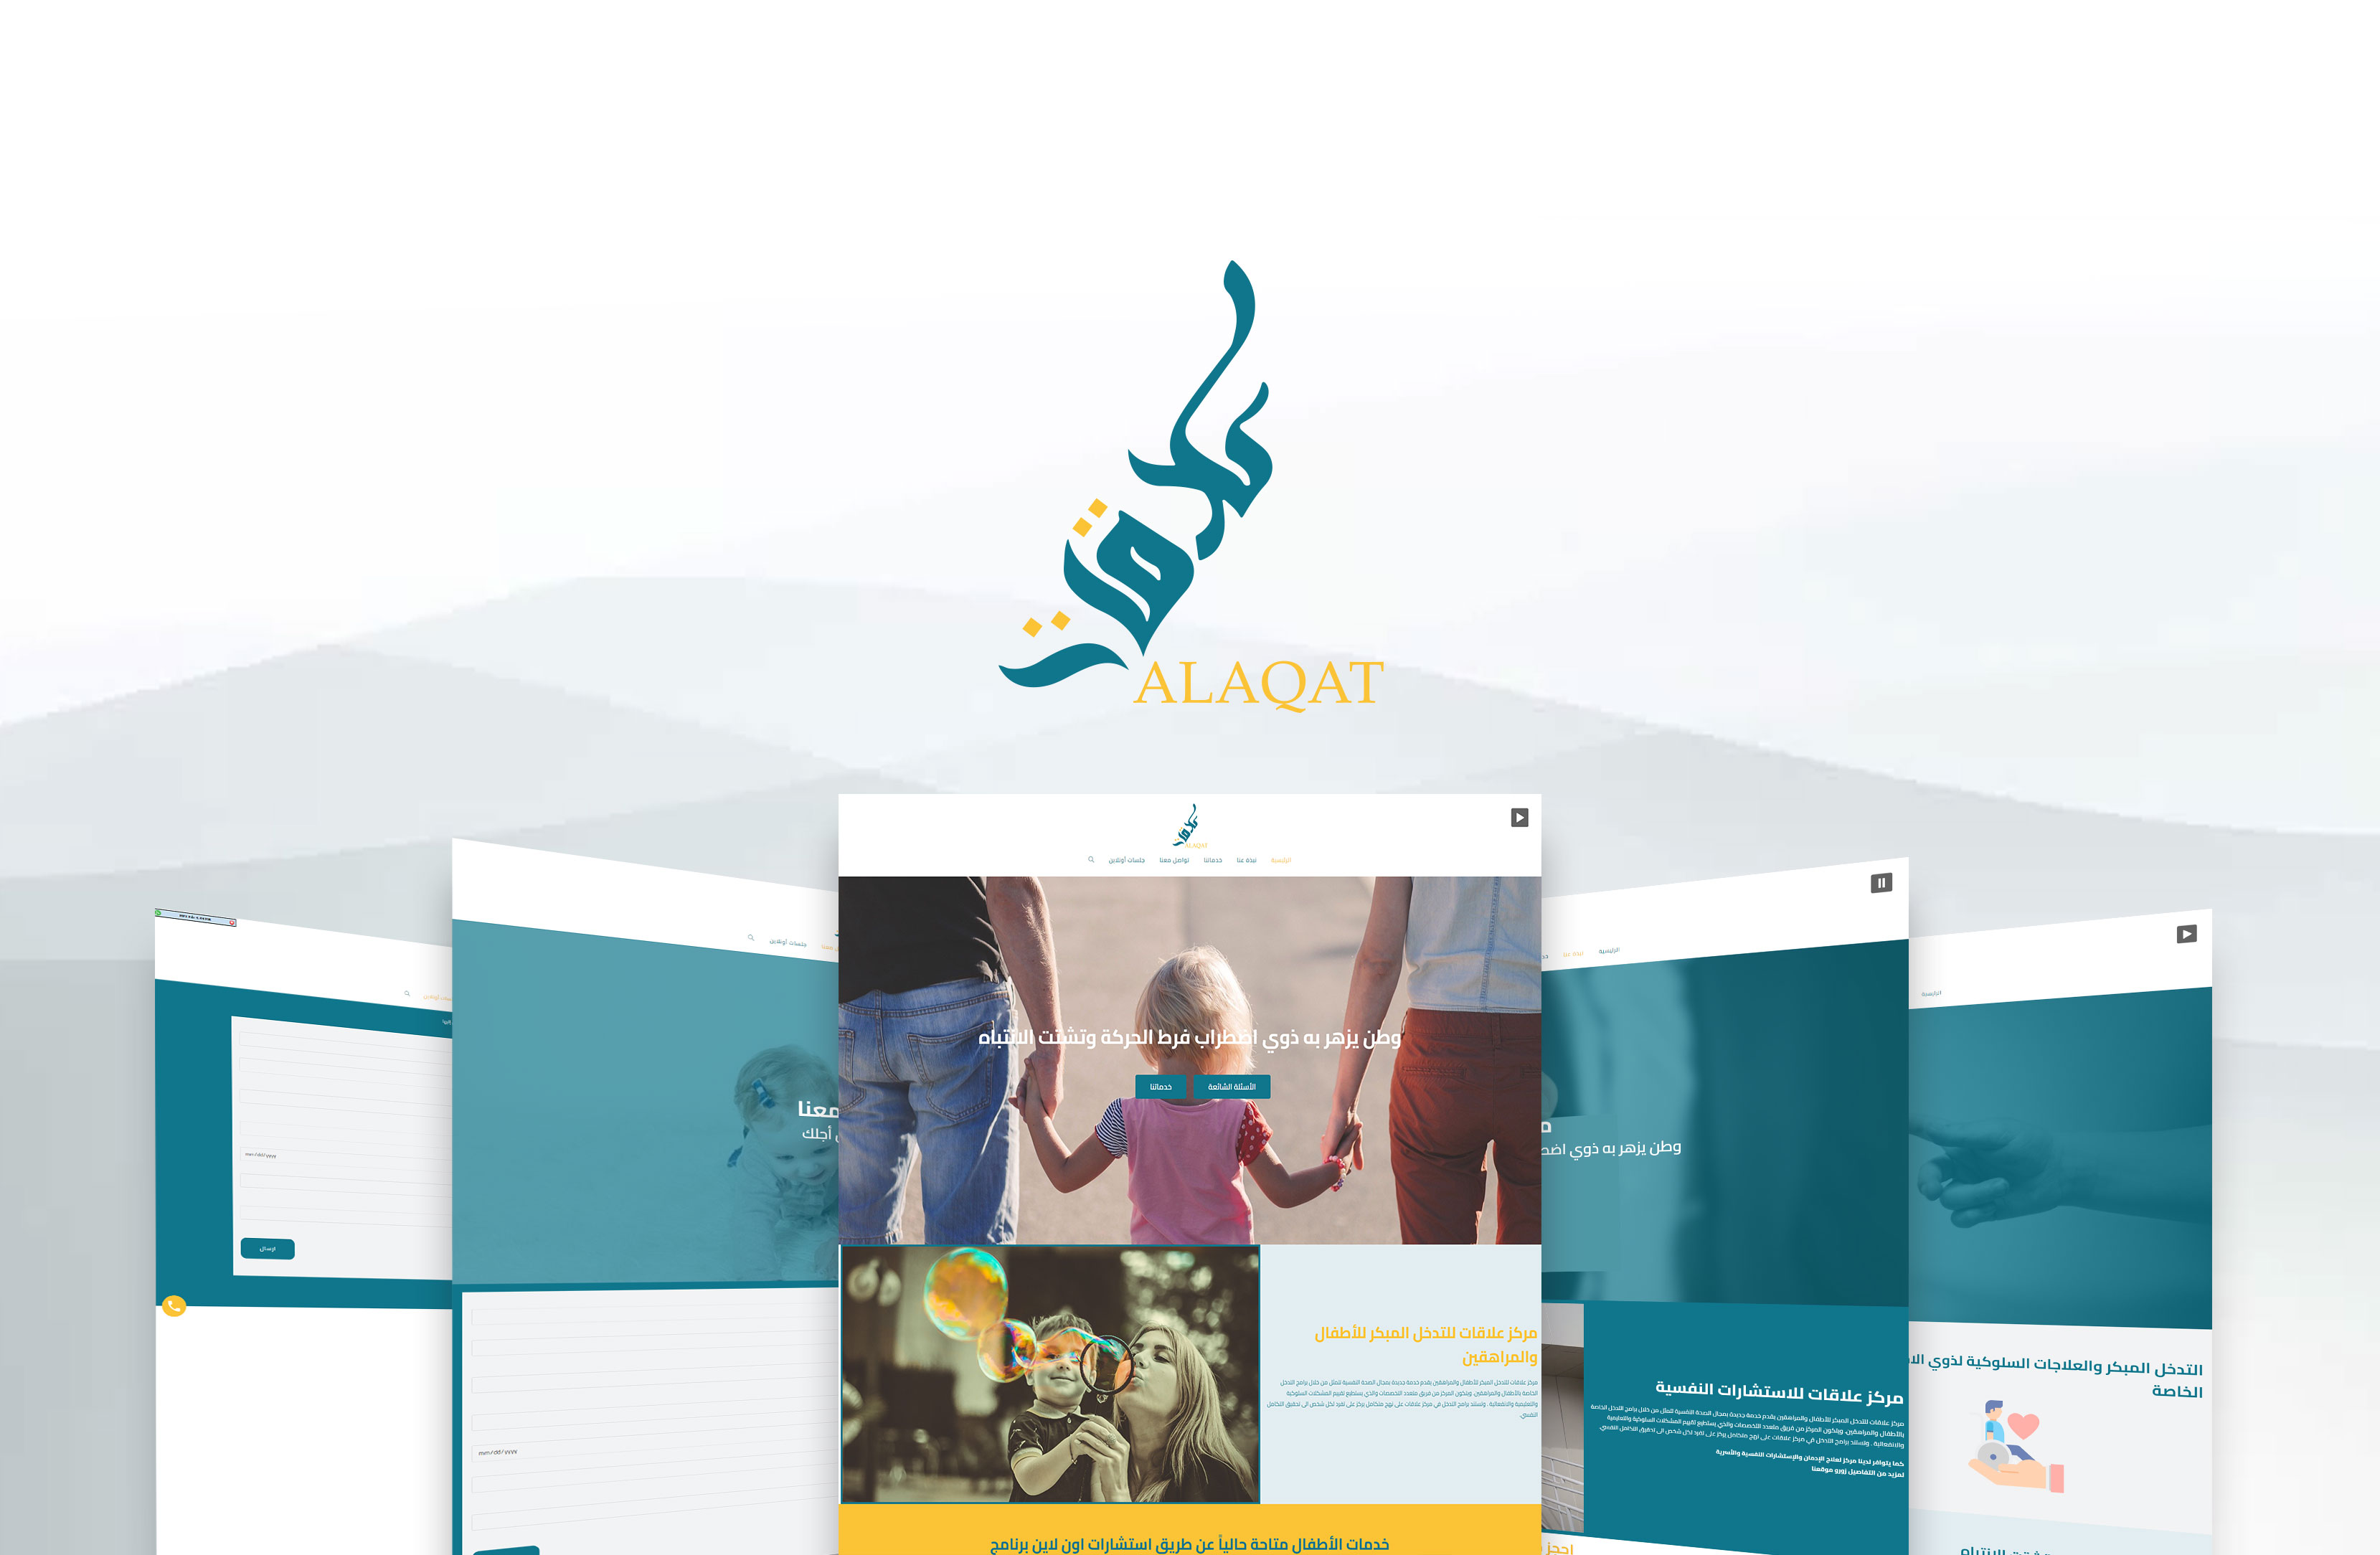 Alaqat website development